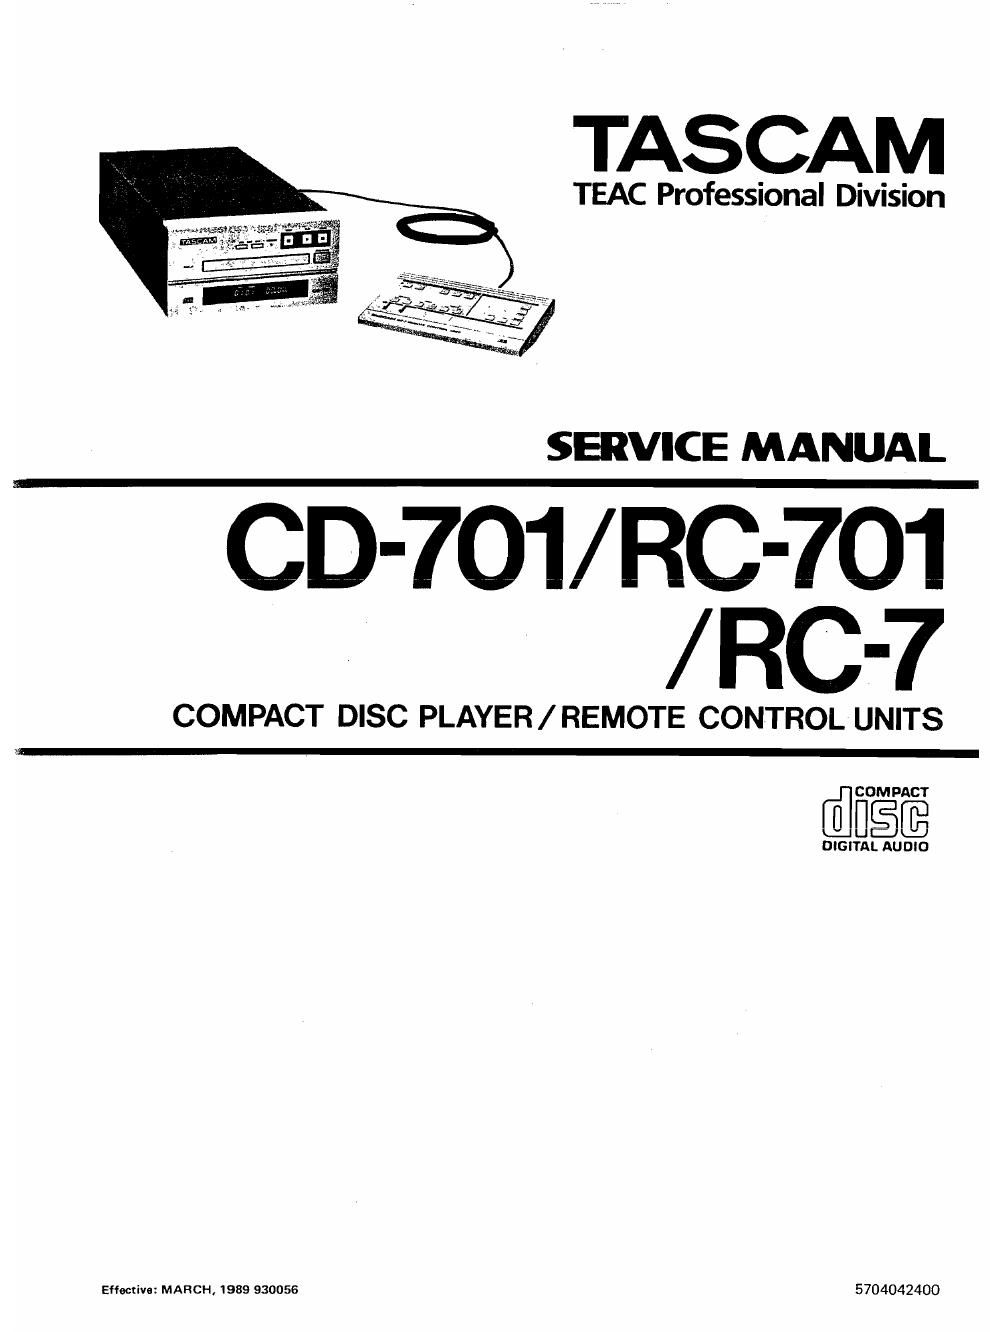 Tascam CD 701 RC 701 RC 7 Service Manual